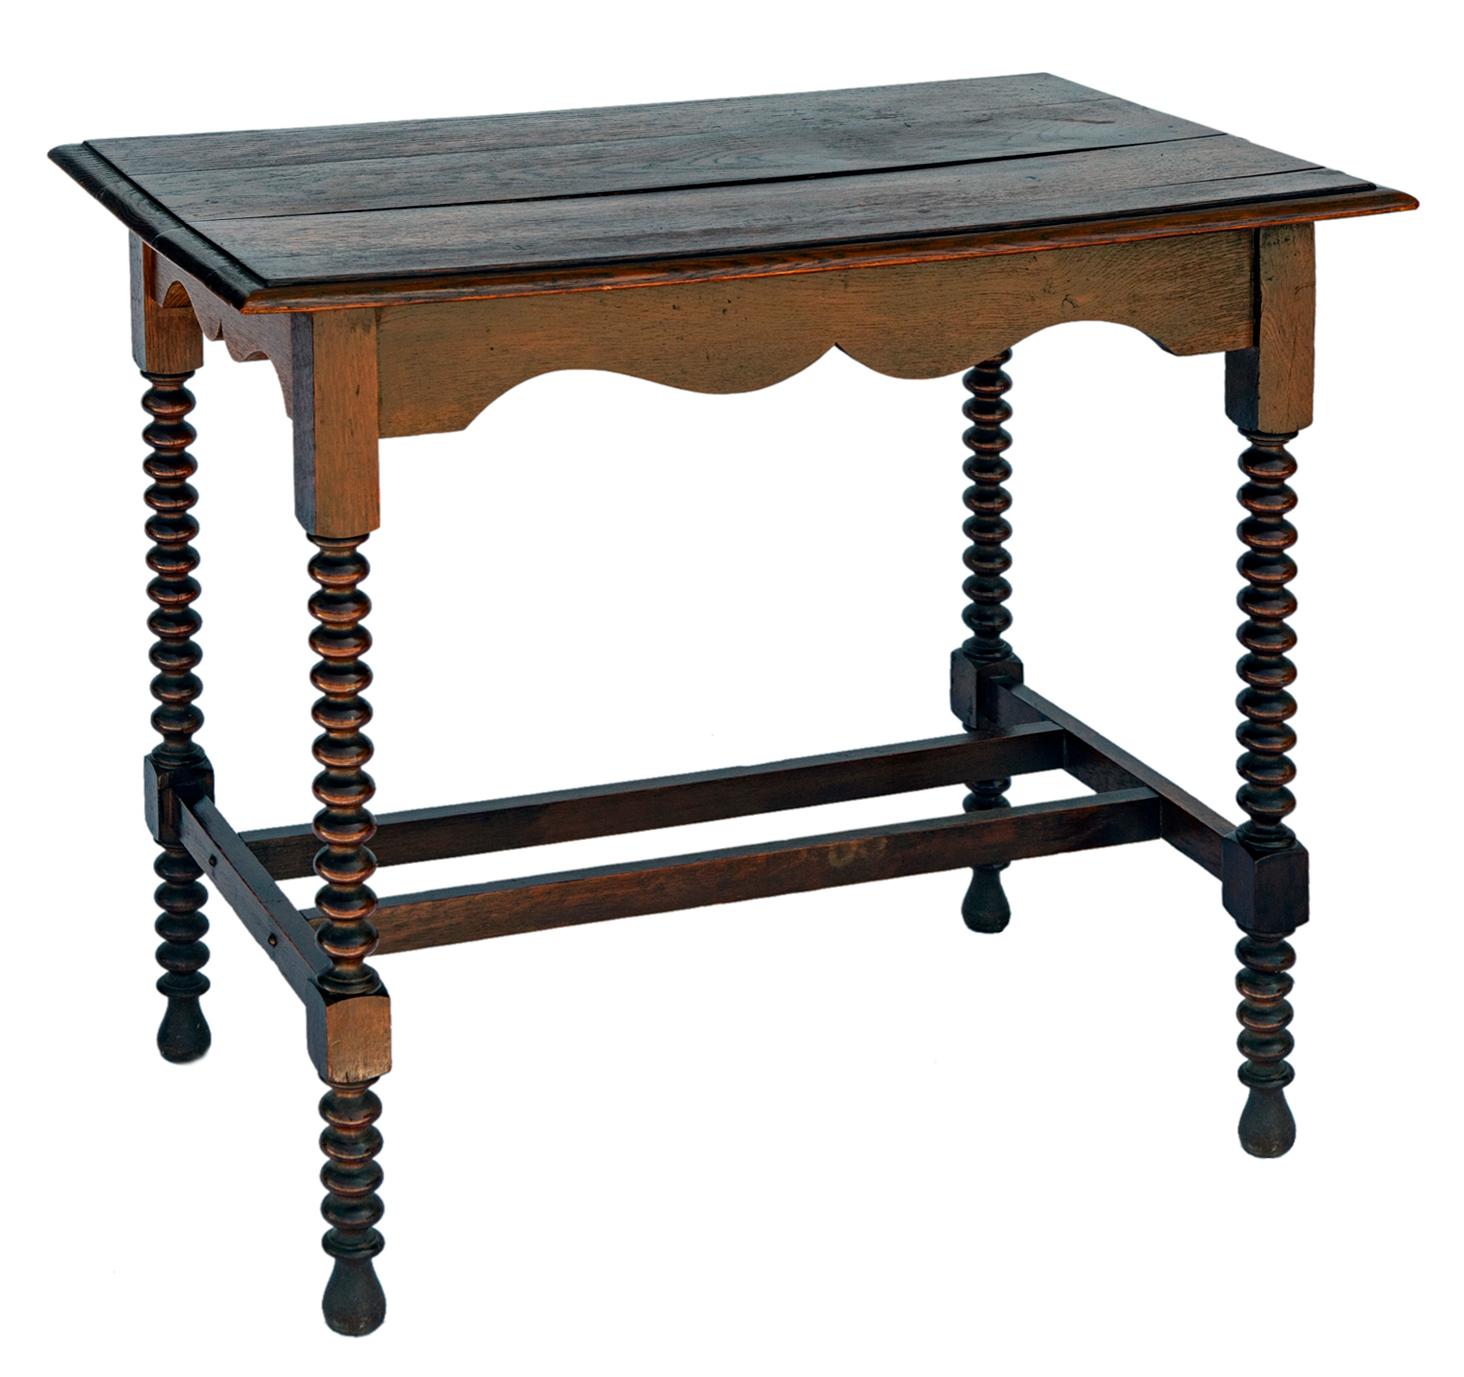 Edwardian Tall Oak Console Table with Spool Legs & Decorative Apron